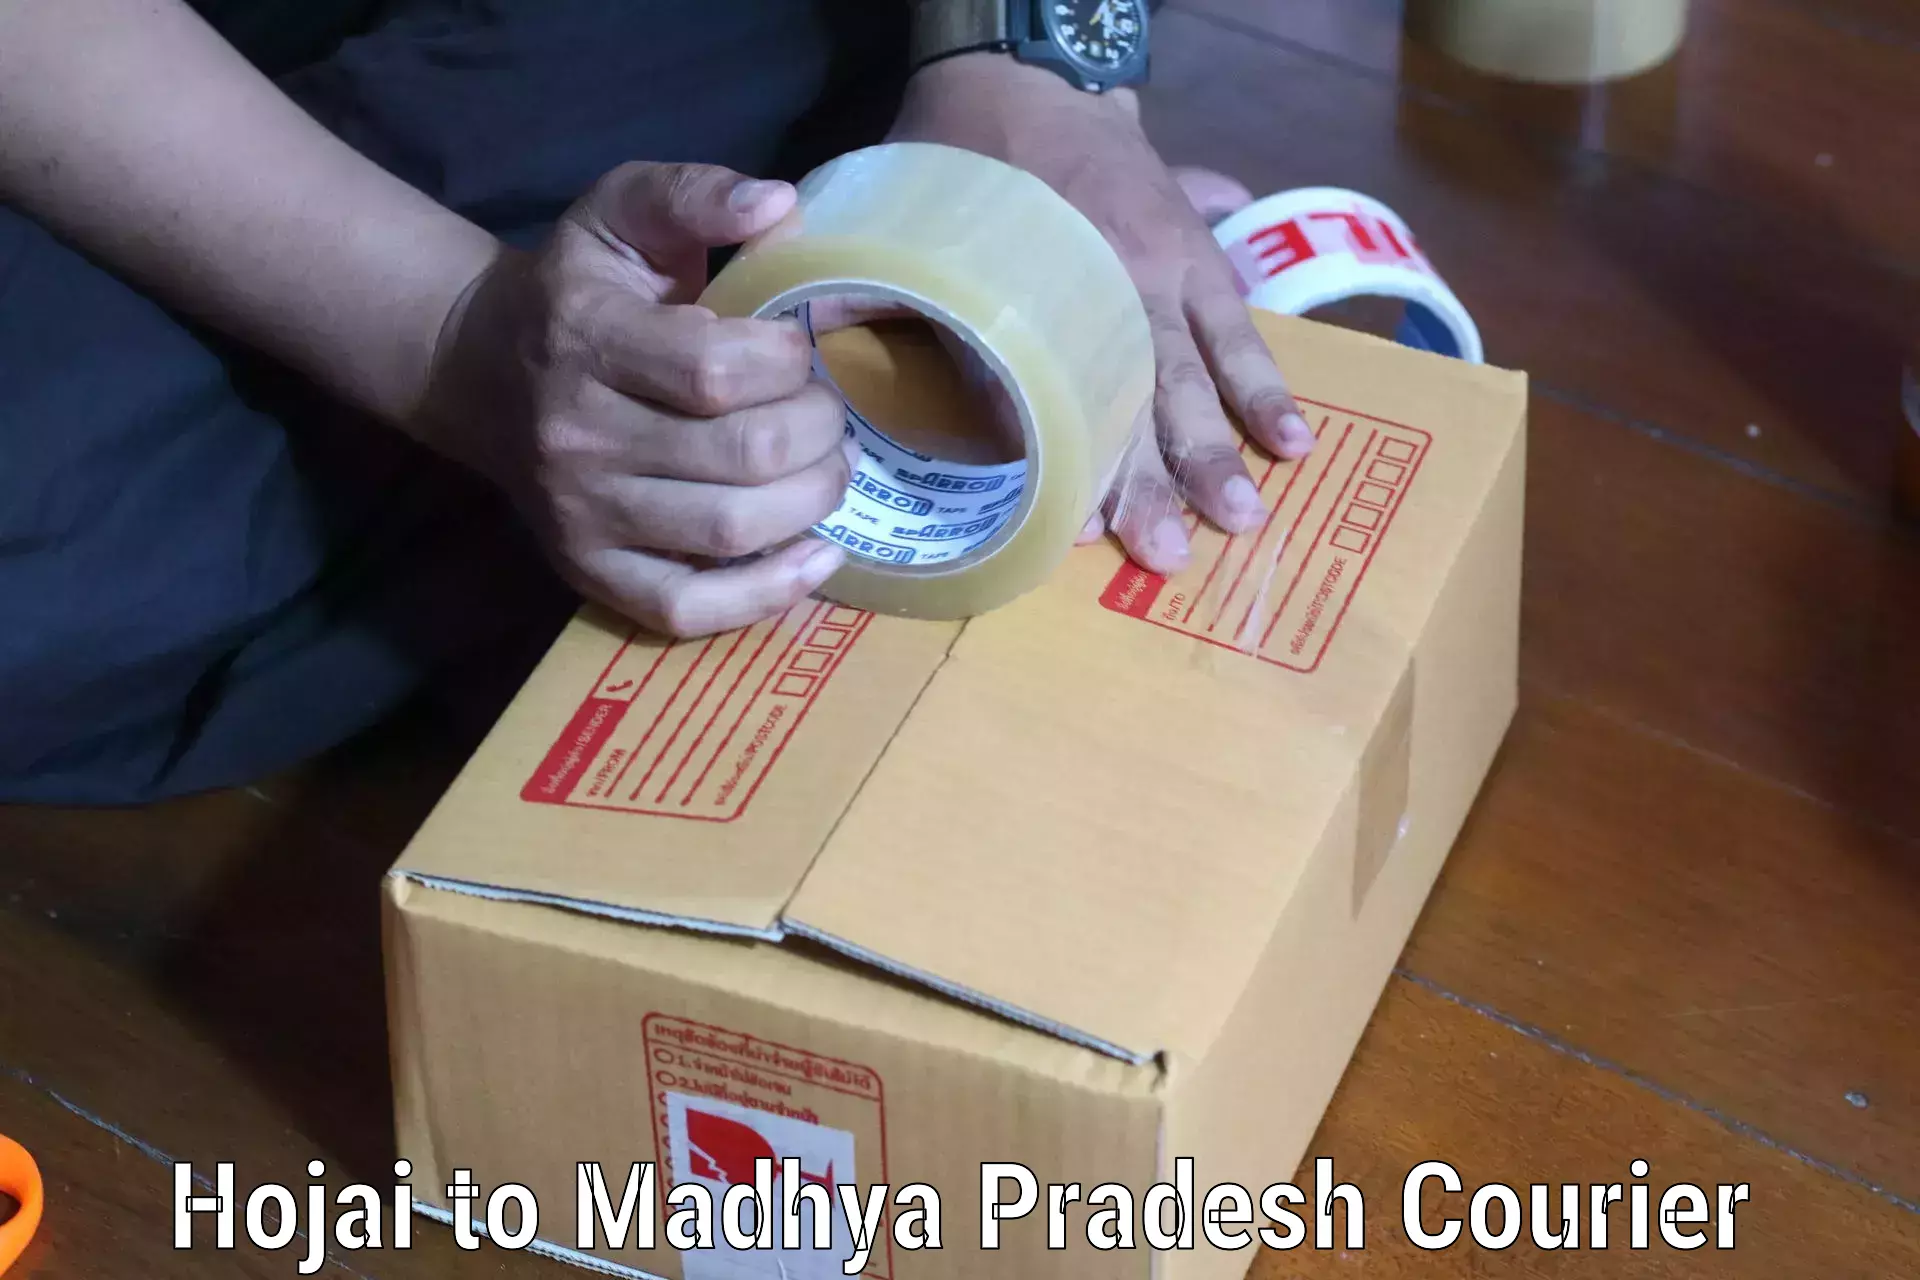 24/7 courier service in Hojai to Madhya Pradesh